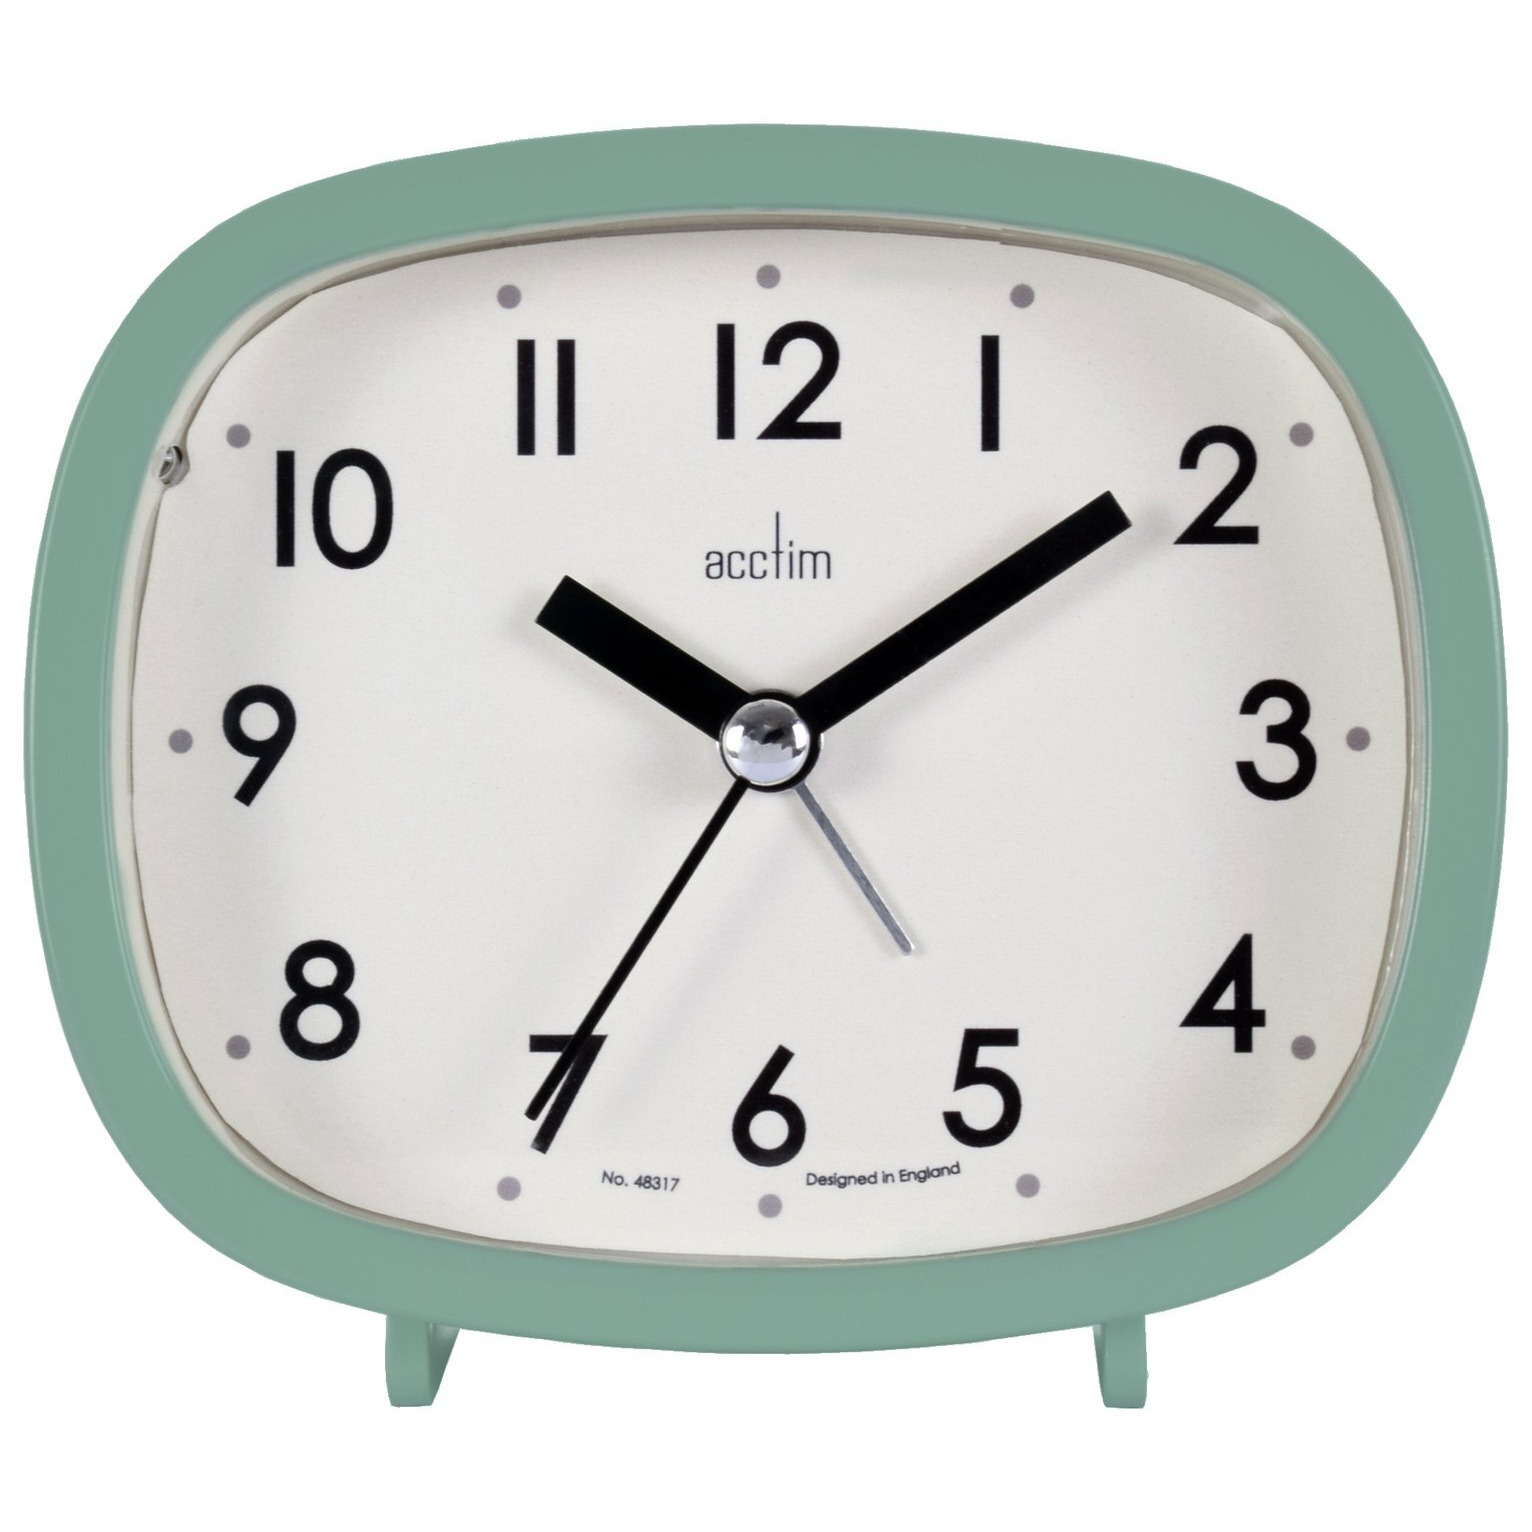 Acctim Hilda Retro Shaped Alarm Clock - Green - image 1